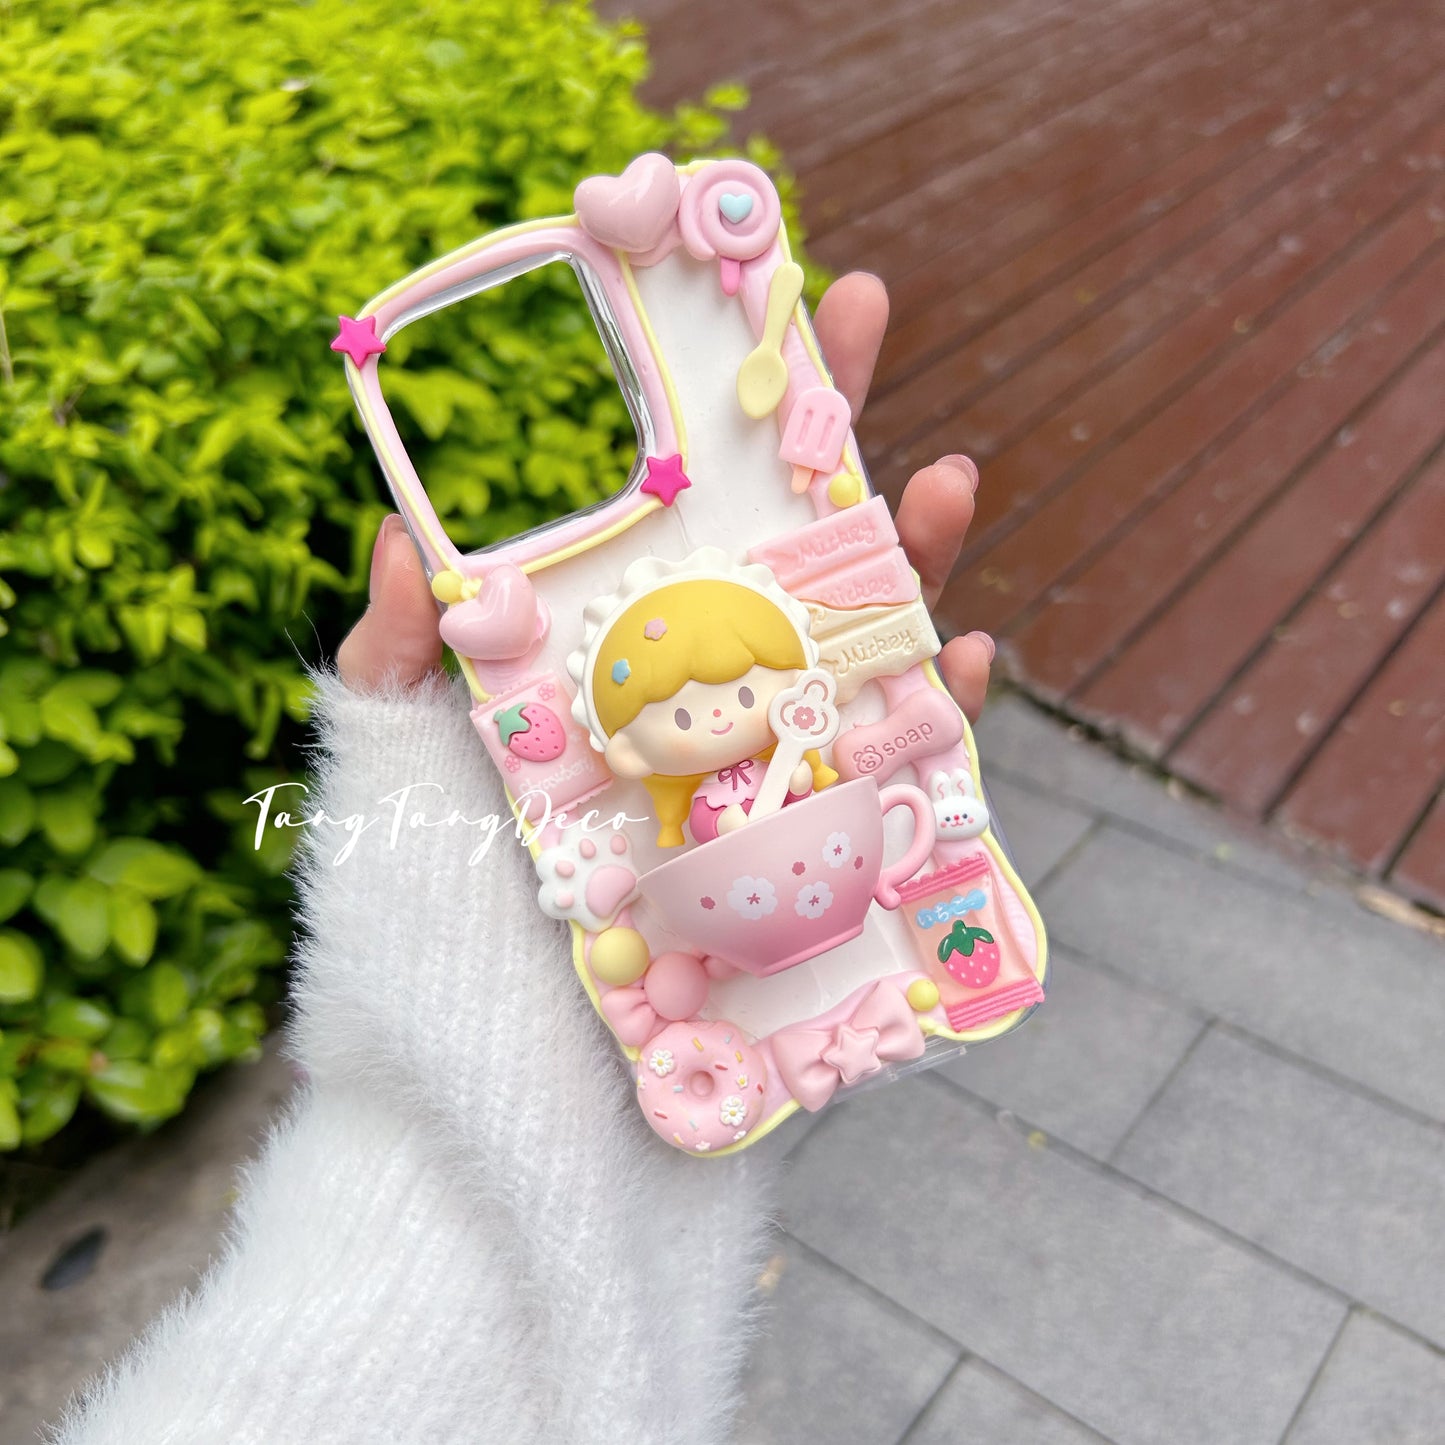 Cute teacup doll phone case